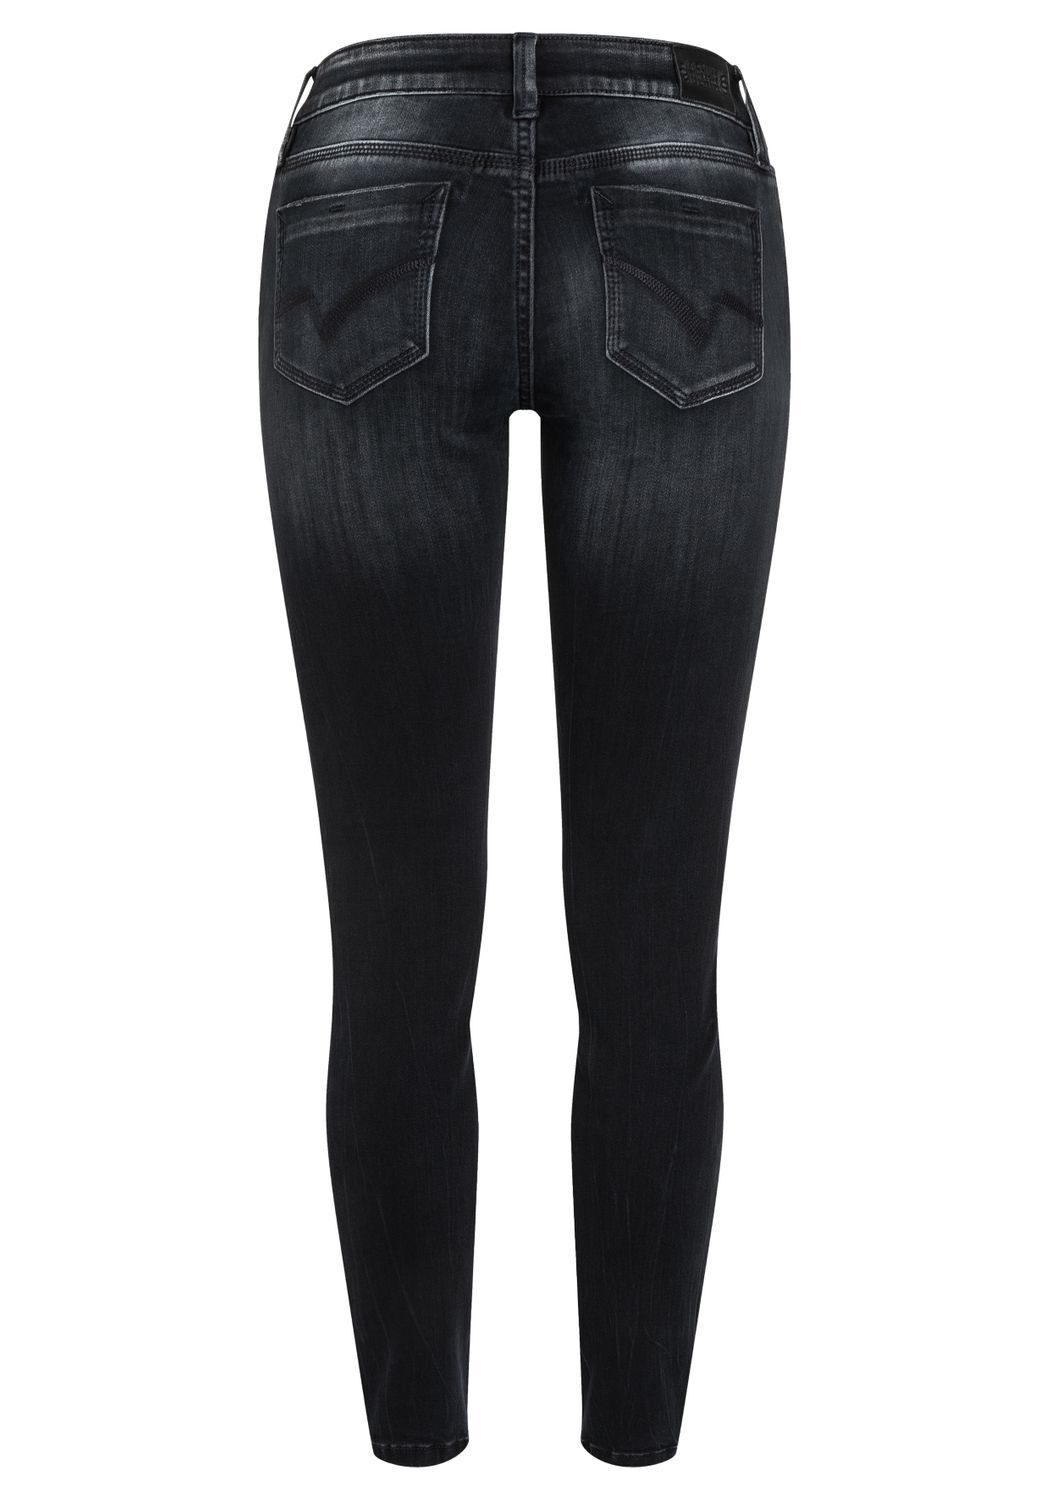 TIMEZONE Damen Jeans TIGHT ALEENATZTZ - Tight Fit - Grau - Gotham Blue Wash